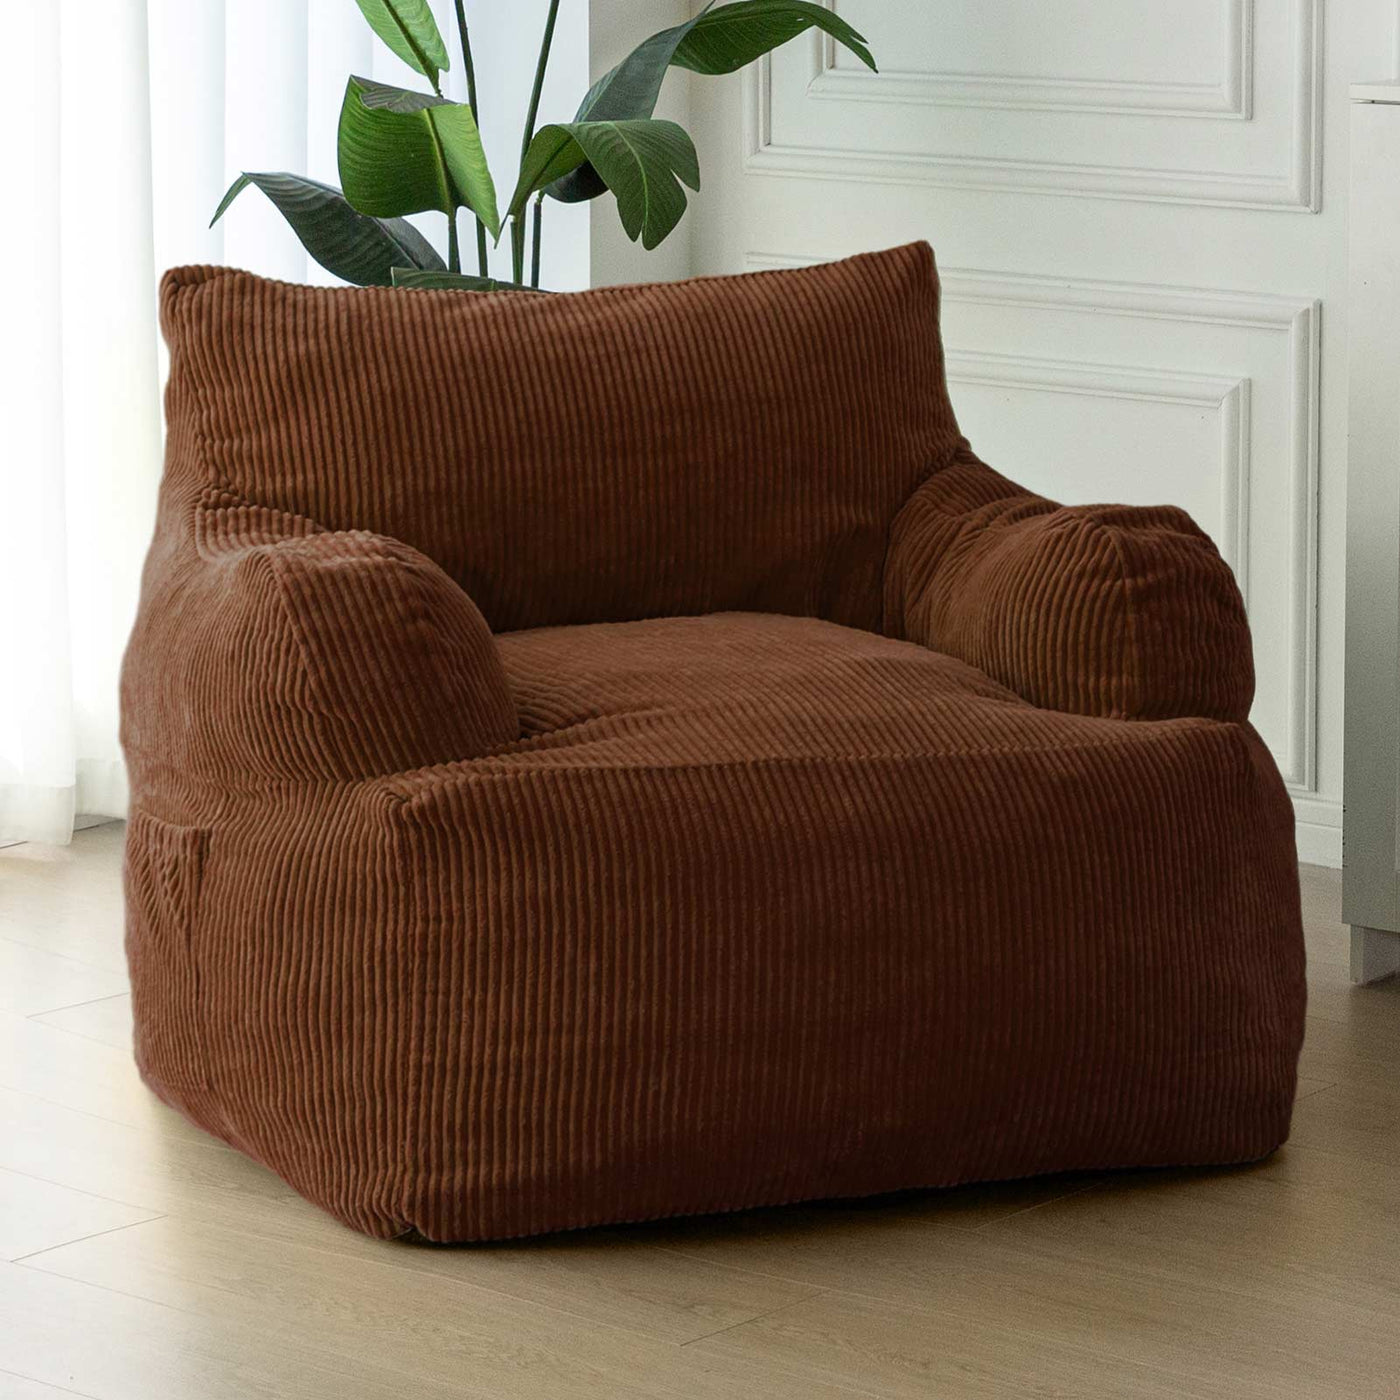 MAXYOYO Giant Bean Bag Chair, Stuffed Bean Bag Couch for Living Room, Coffee